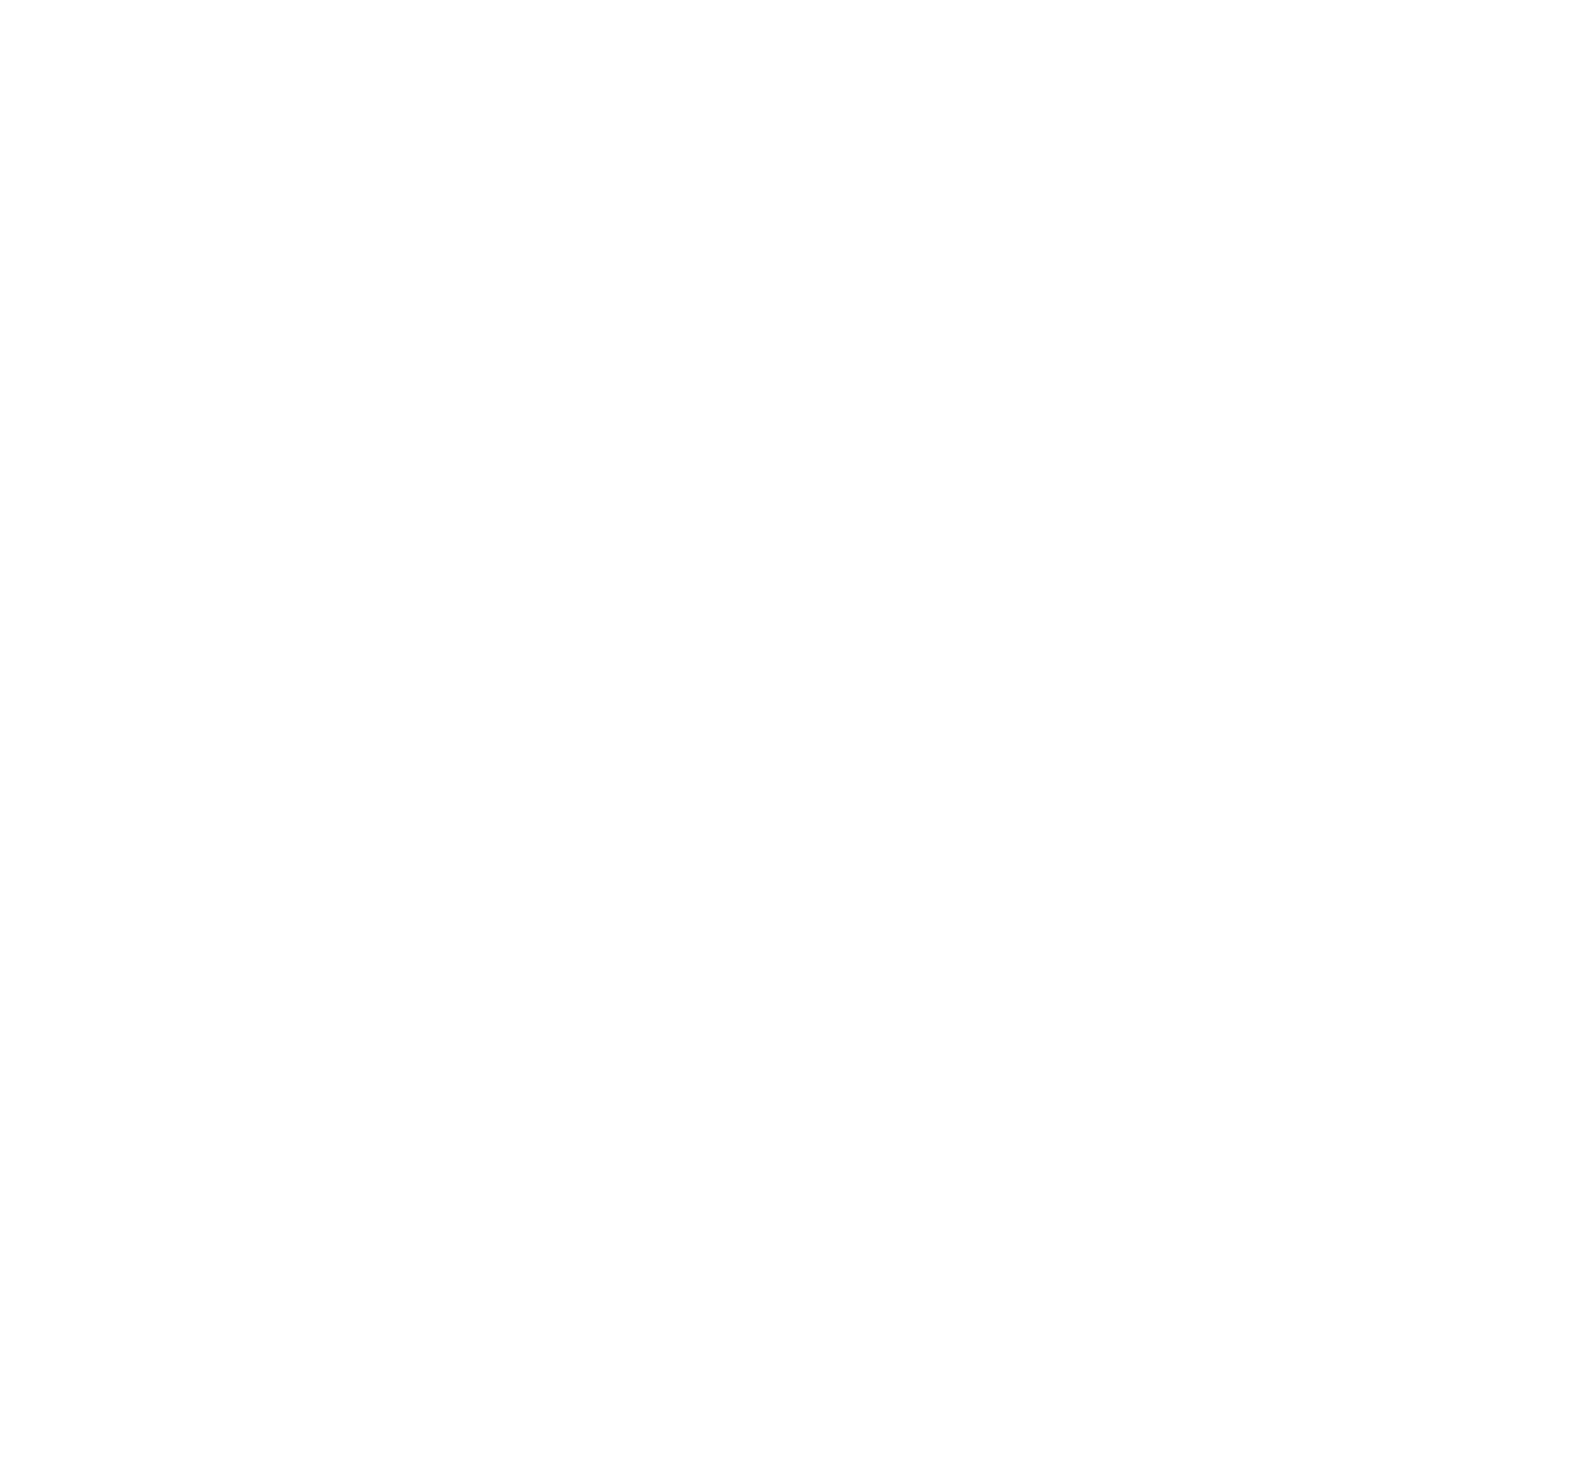 ViNAWALK - ビナウォーク LINEお友達募集中！！